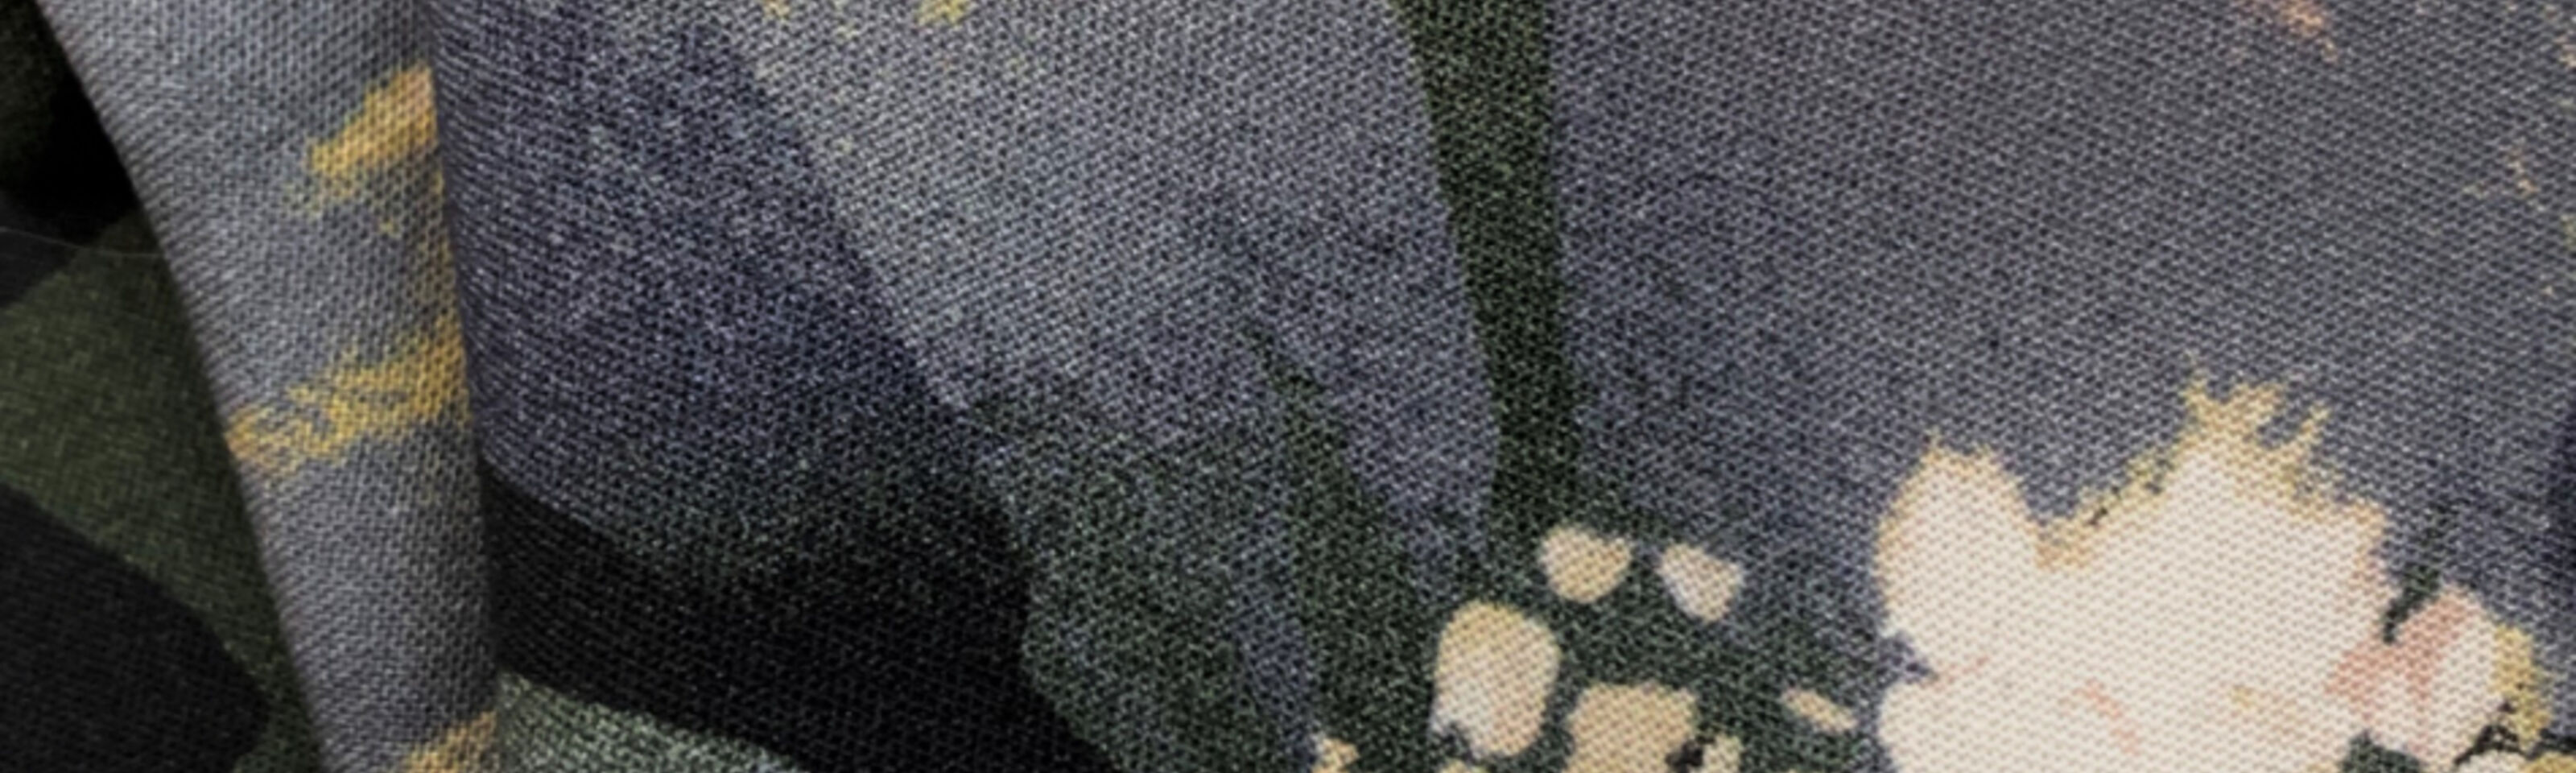 JK - Fenrnando - Olive - Floral Printed Viscose Challis John Kaldor Designer Dress Fabric - Close Up Fabric Photo 